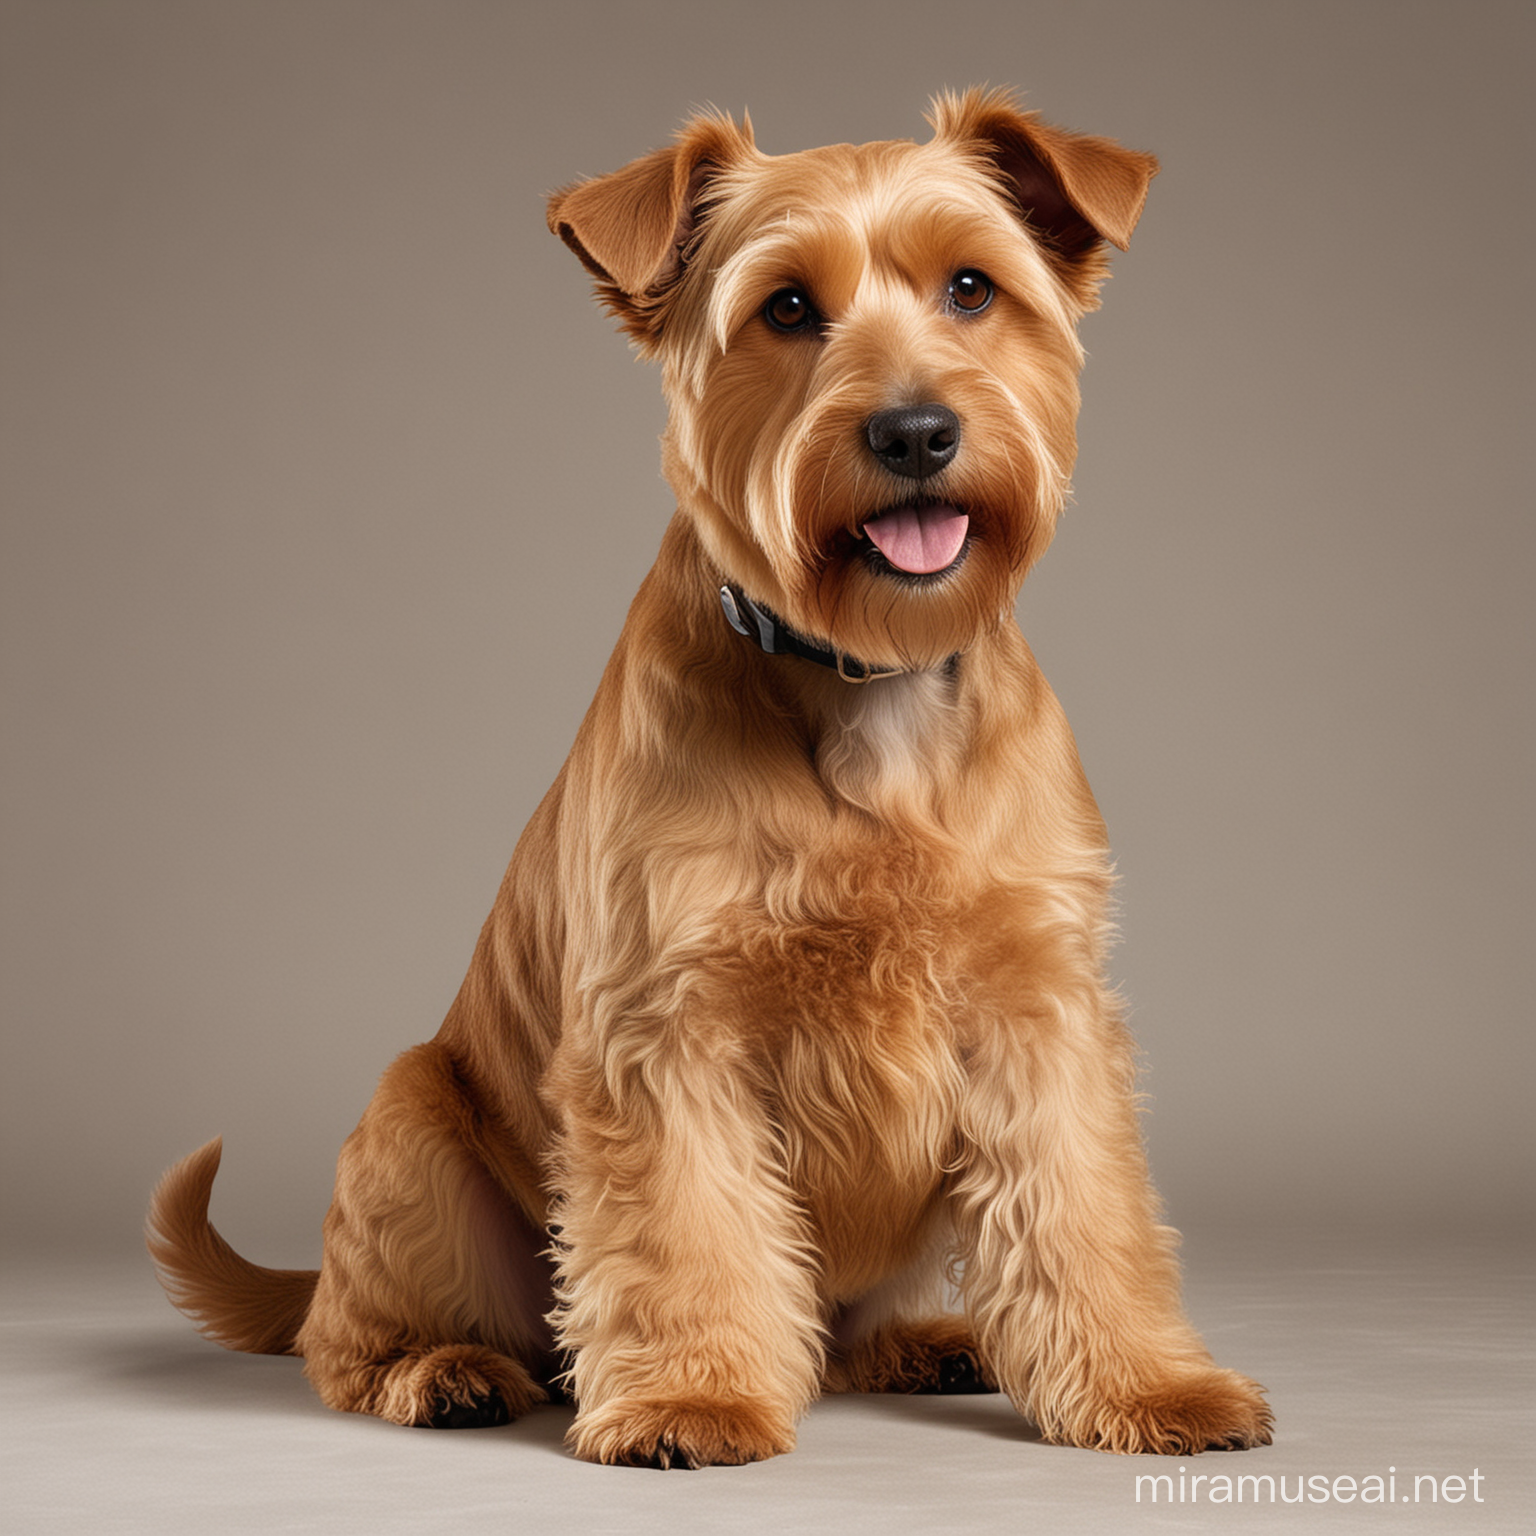 Shaggy light brown terrier dog sitting full body view